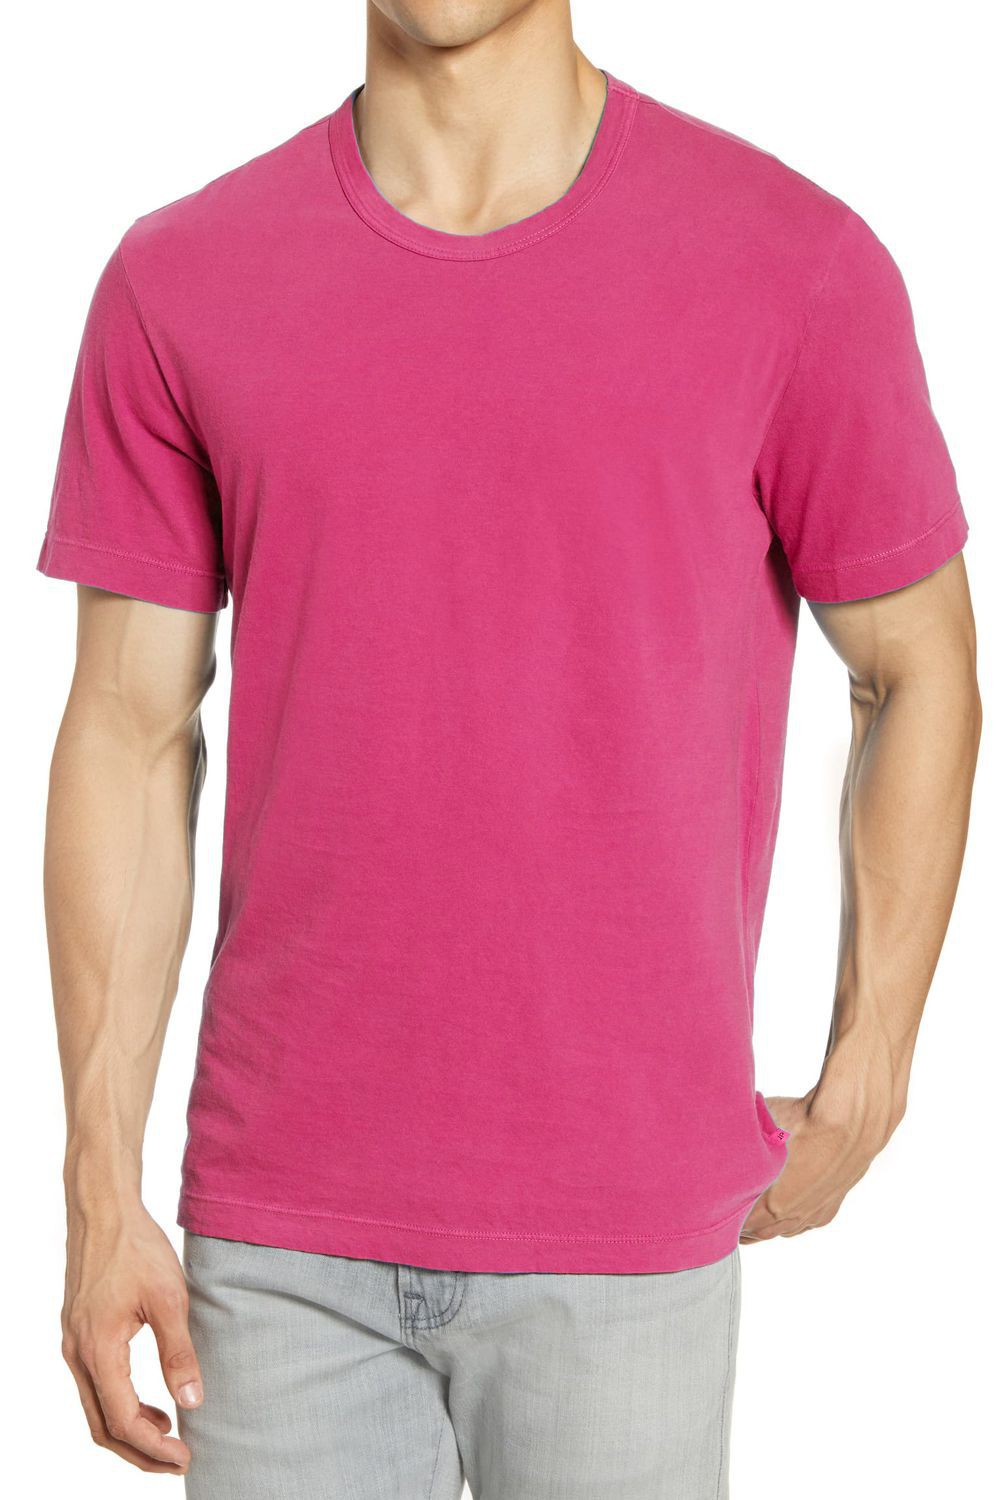 T-Shirt rose manches courtes